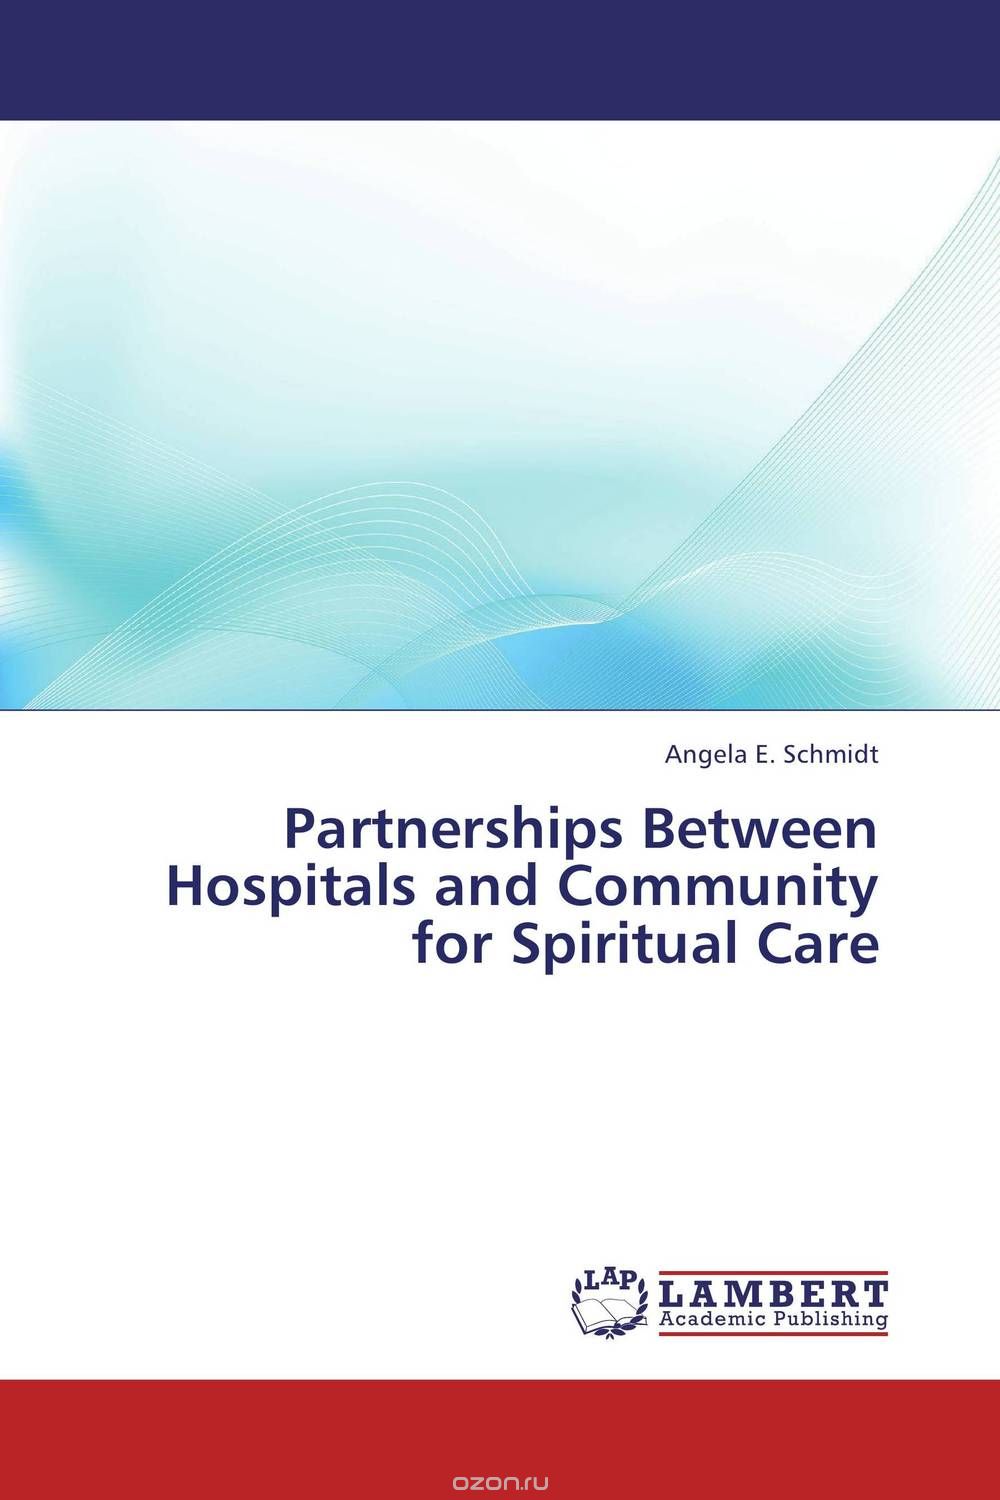 Скачать книгу "Partnerships Between Hospitals and Community for Spiritual Care"